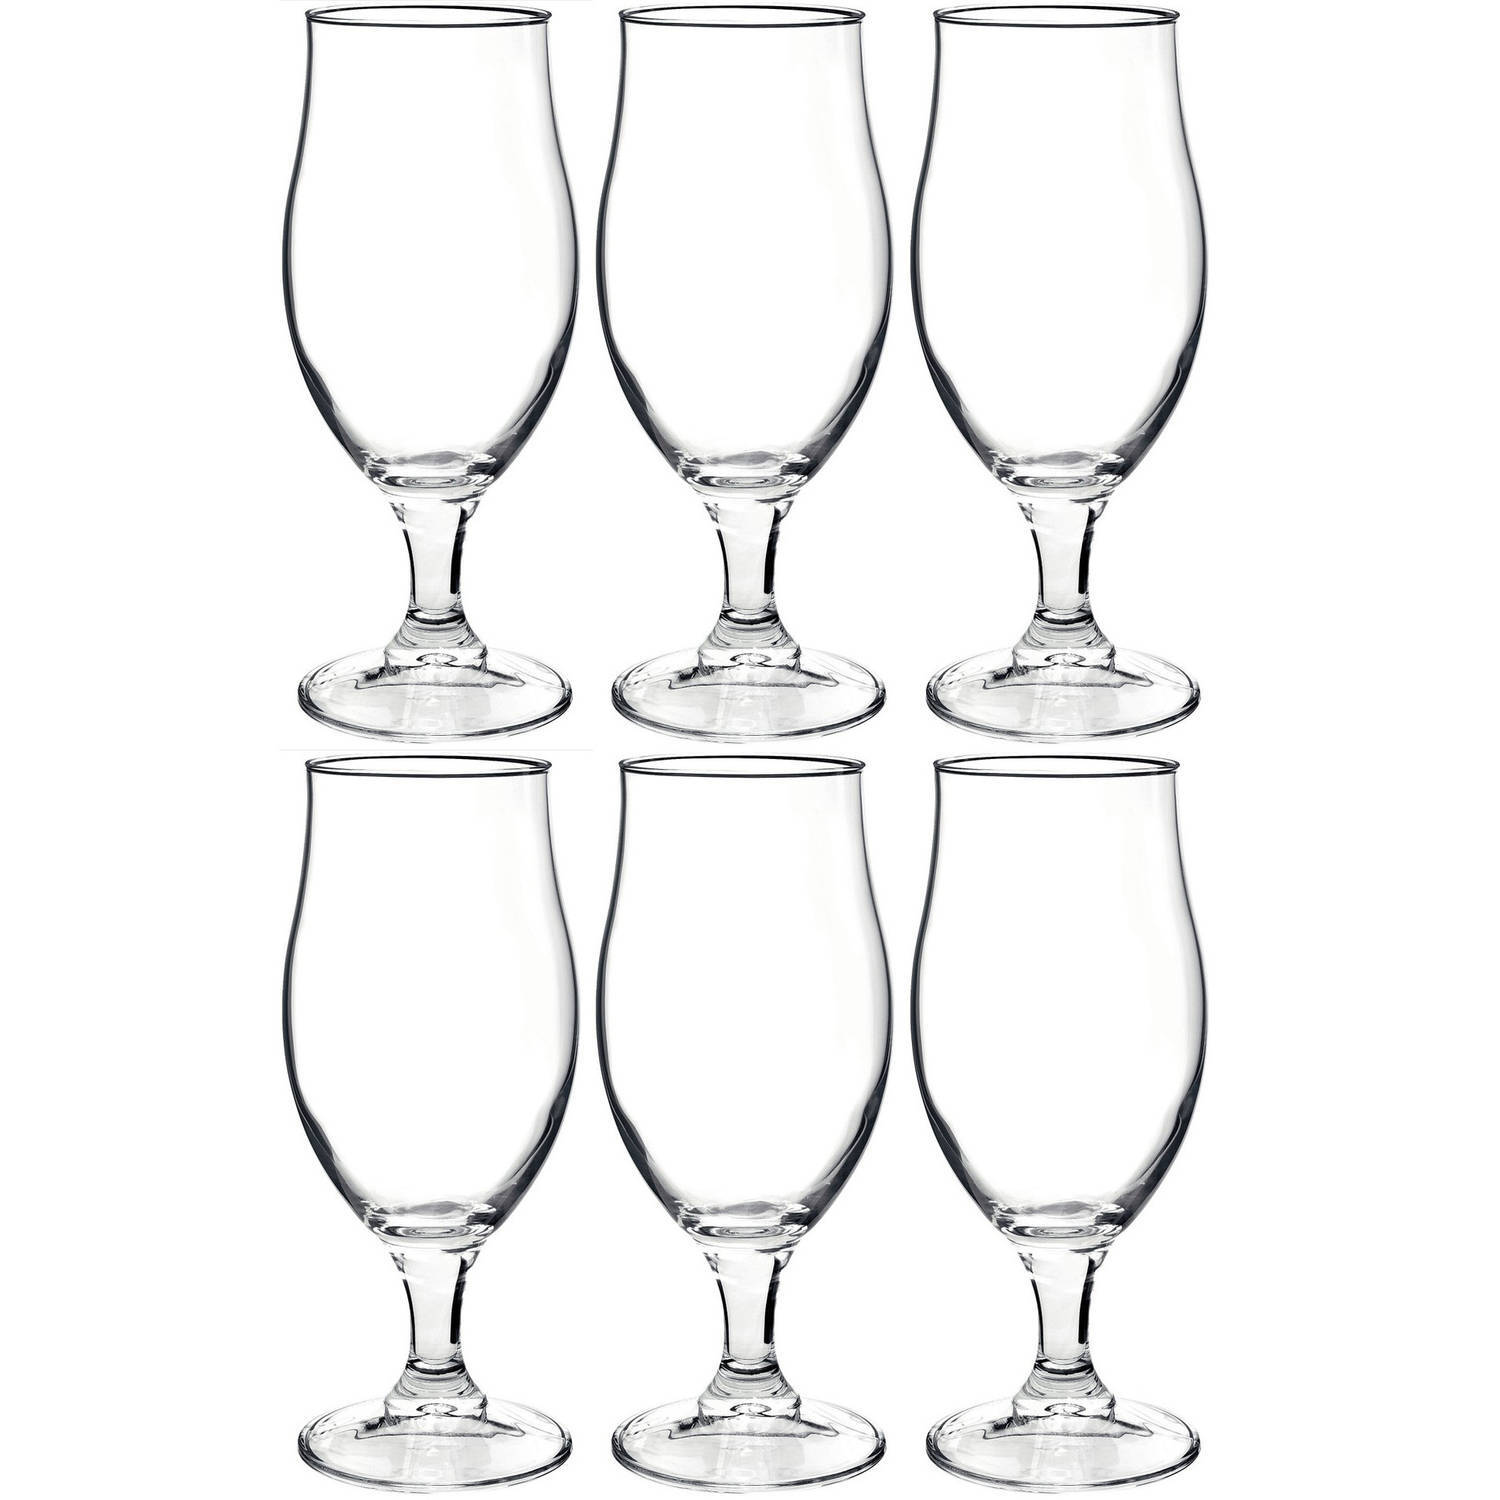 BORMIOLI ROCCO 6x stuks luxe bierglazen speciaalbier 375 ml - bierglazen - glazen voor speciaalbier